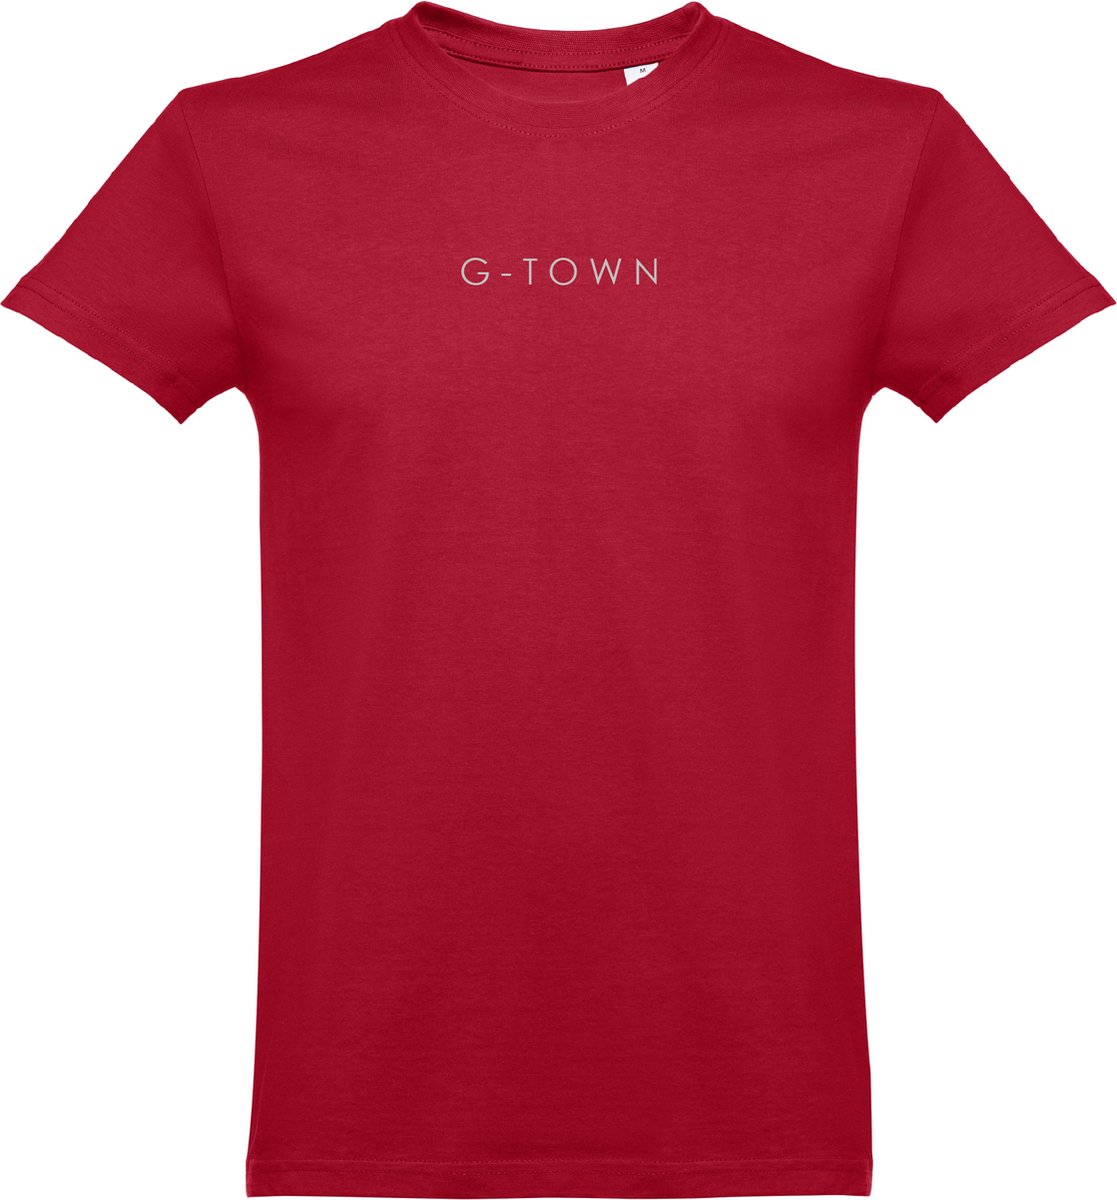 G-TOWN T-shirt Classy